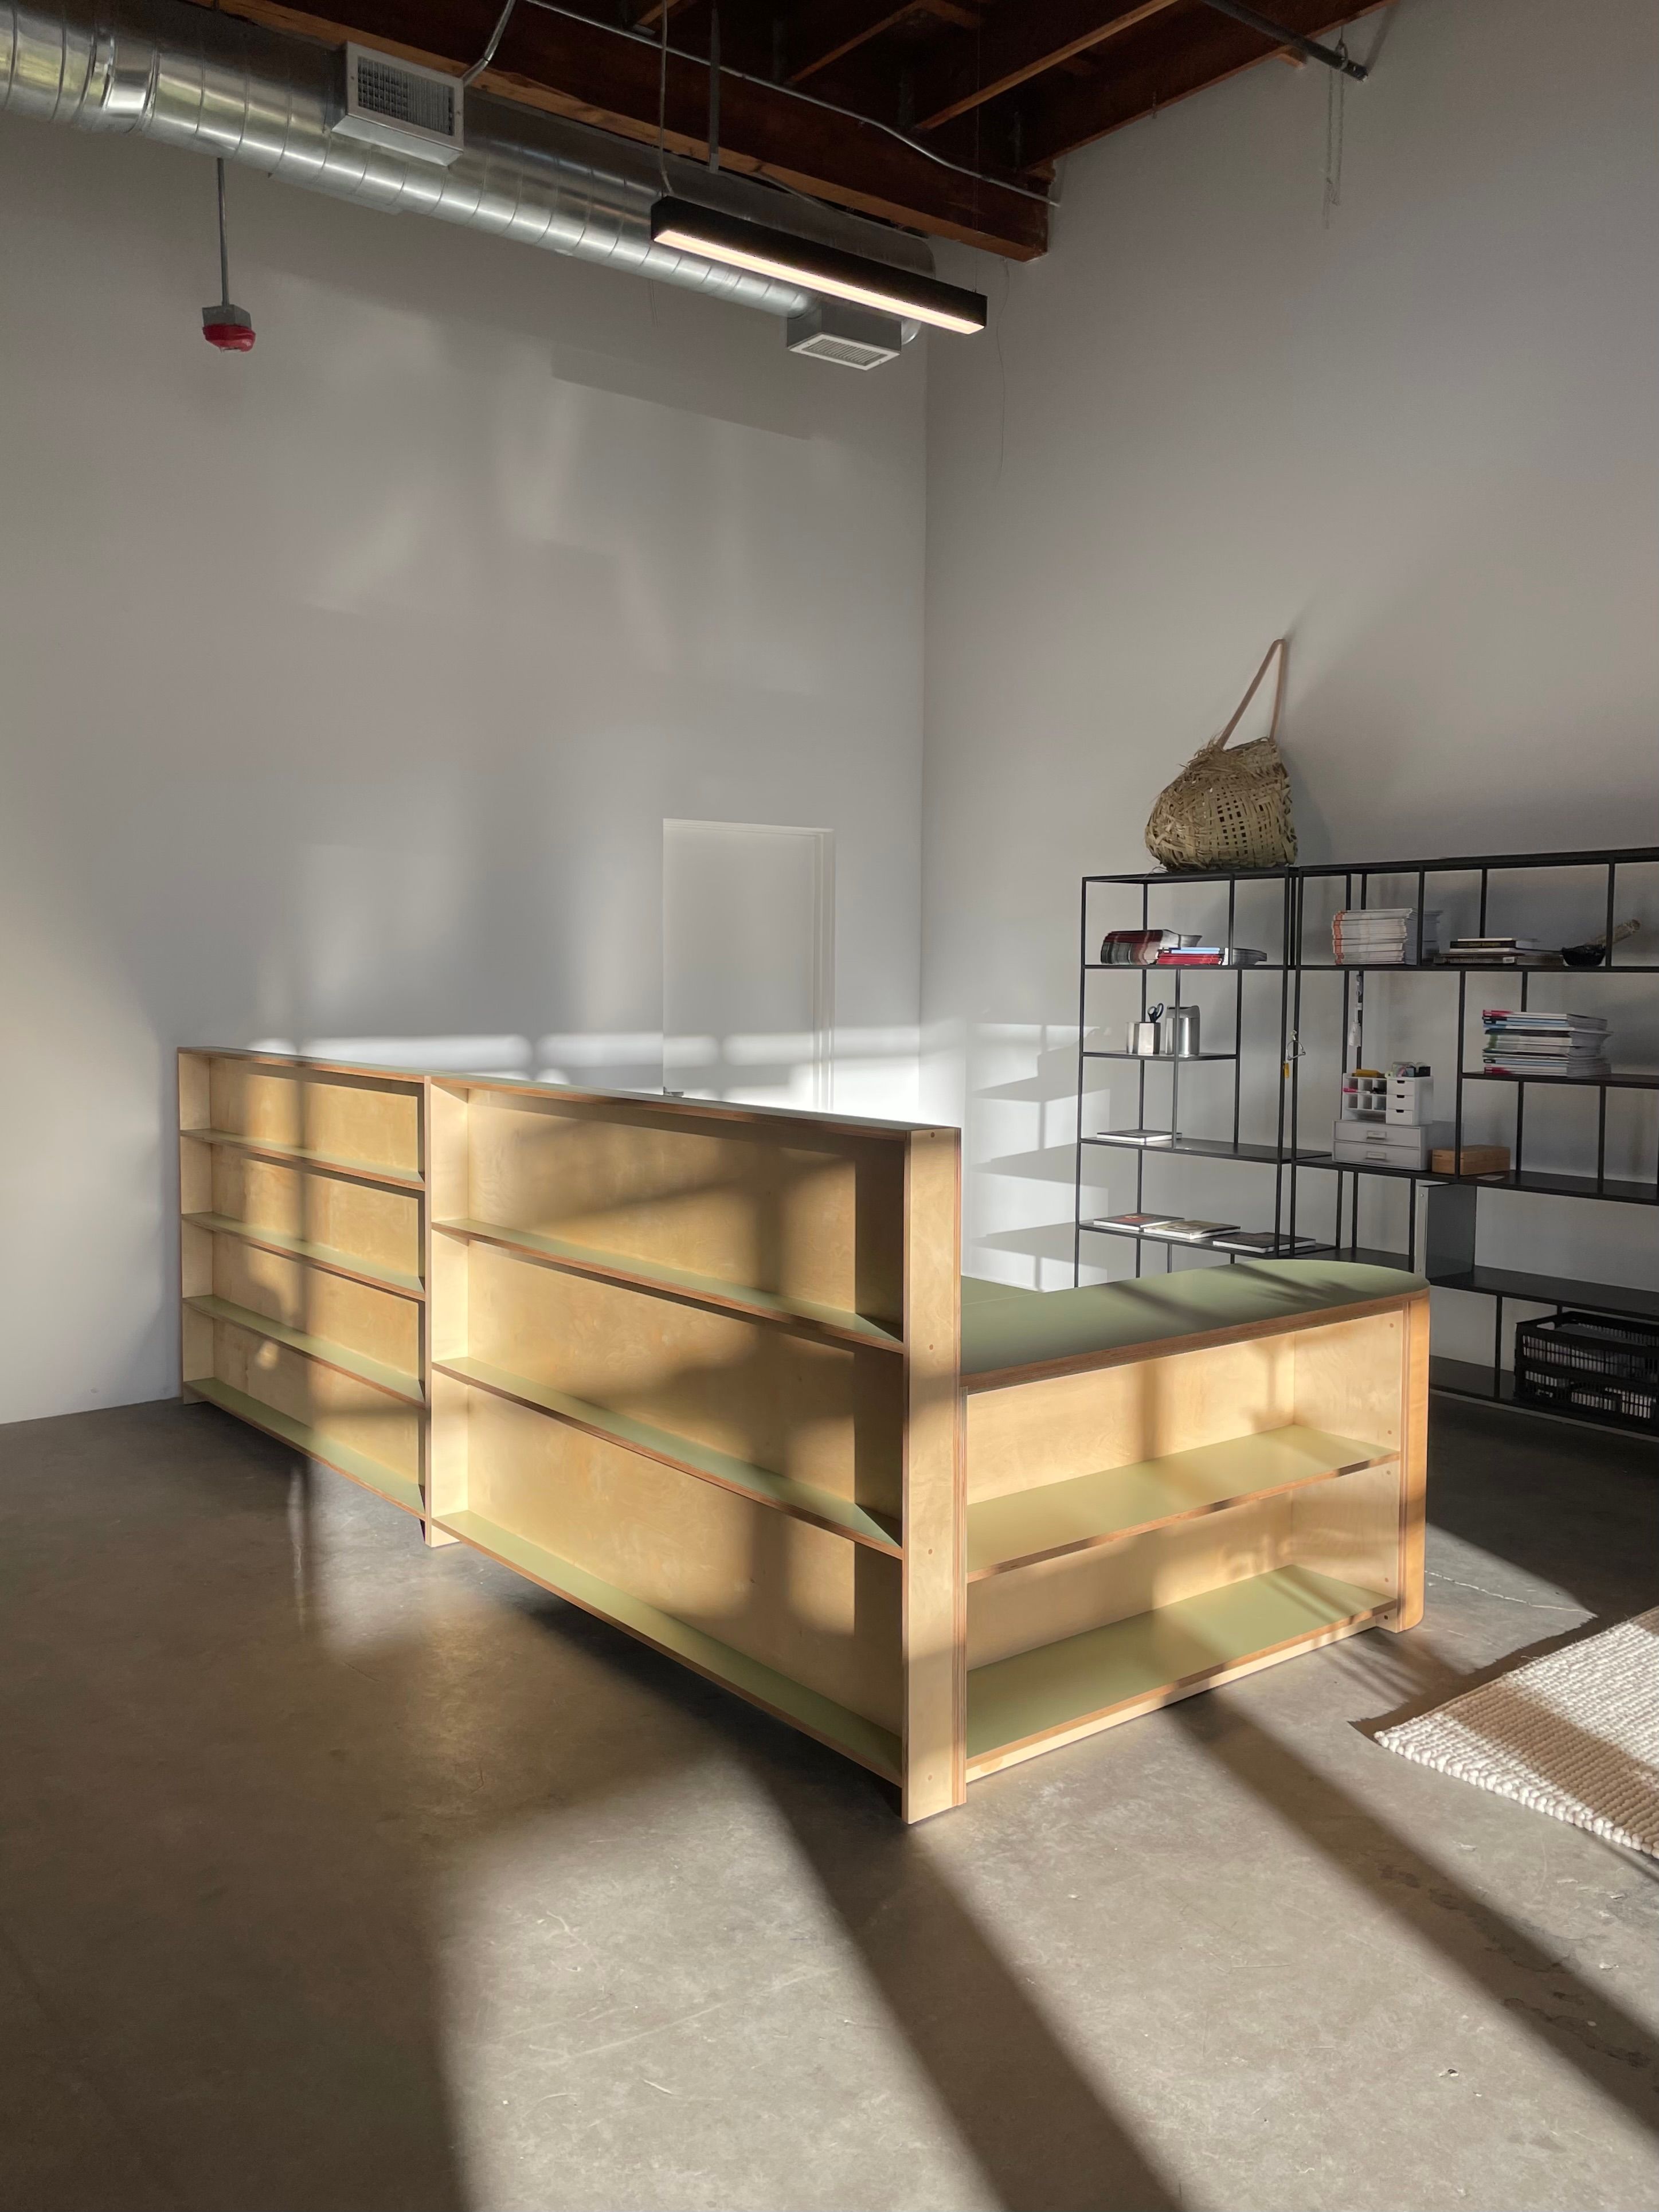  Reception Desk - Murmurs Gallery product image 2